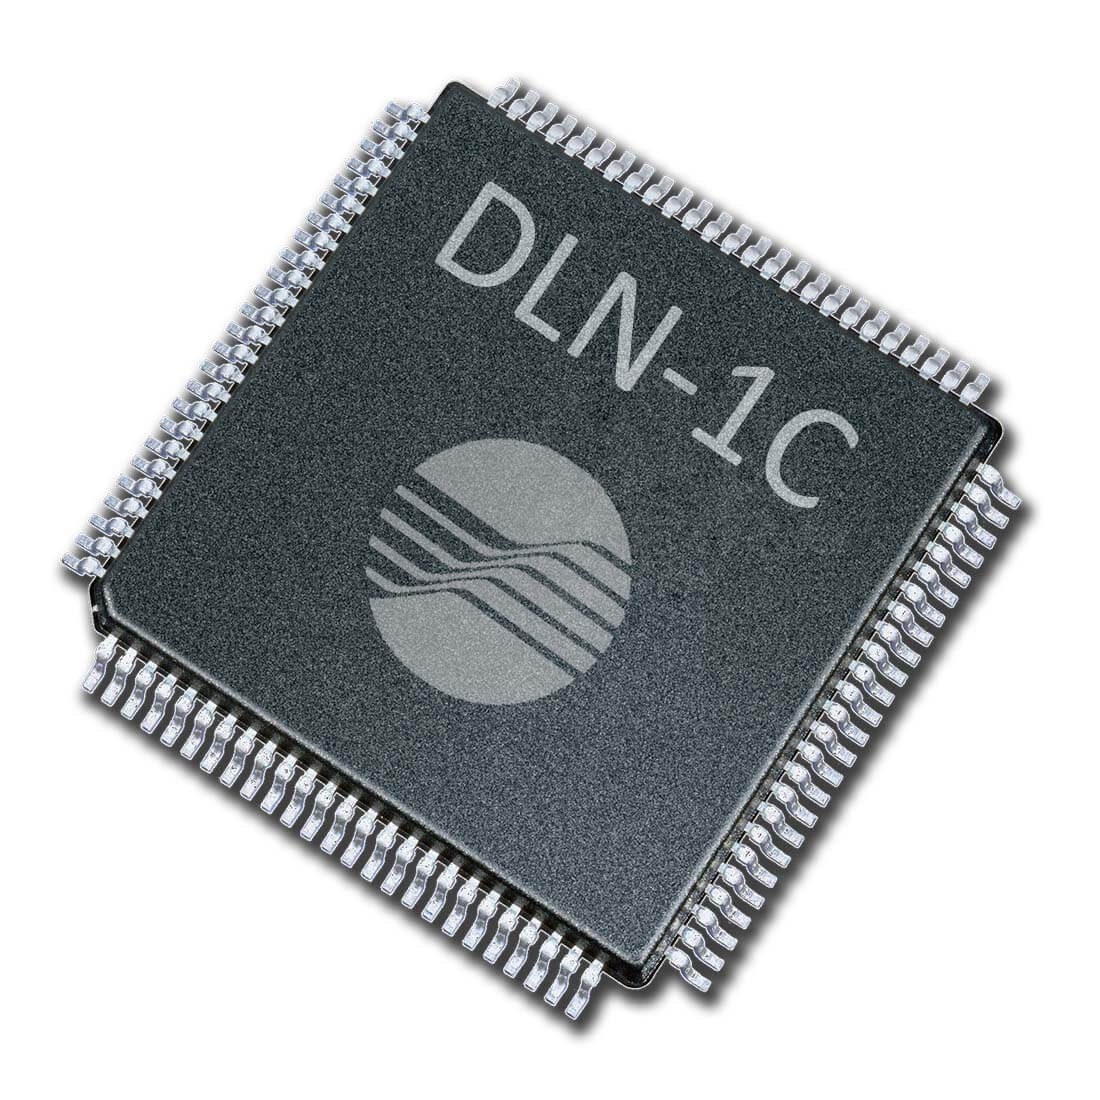 PC-I2C/SPI/GPIO Interface (system on chip)